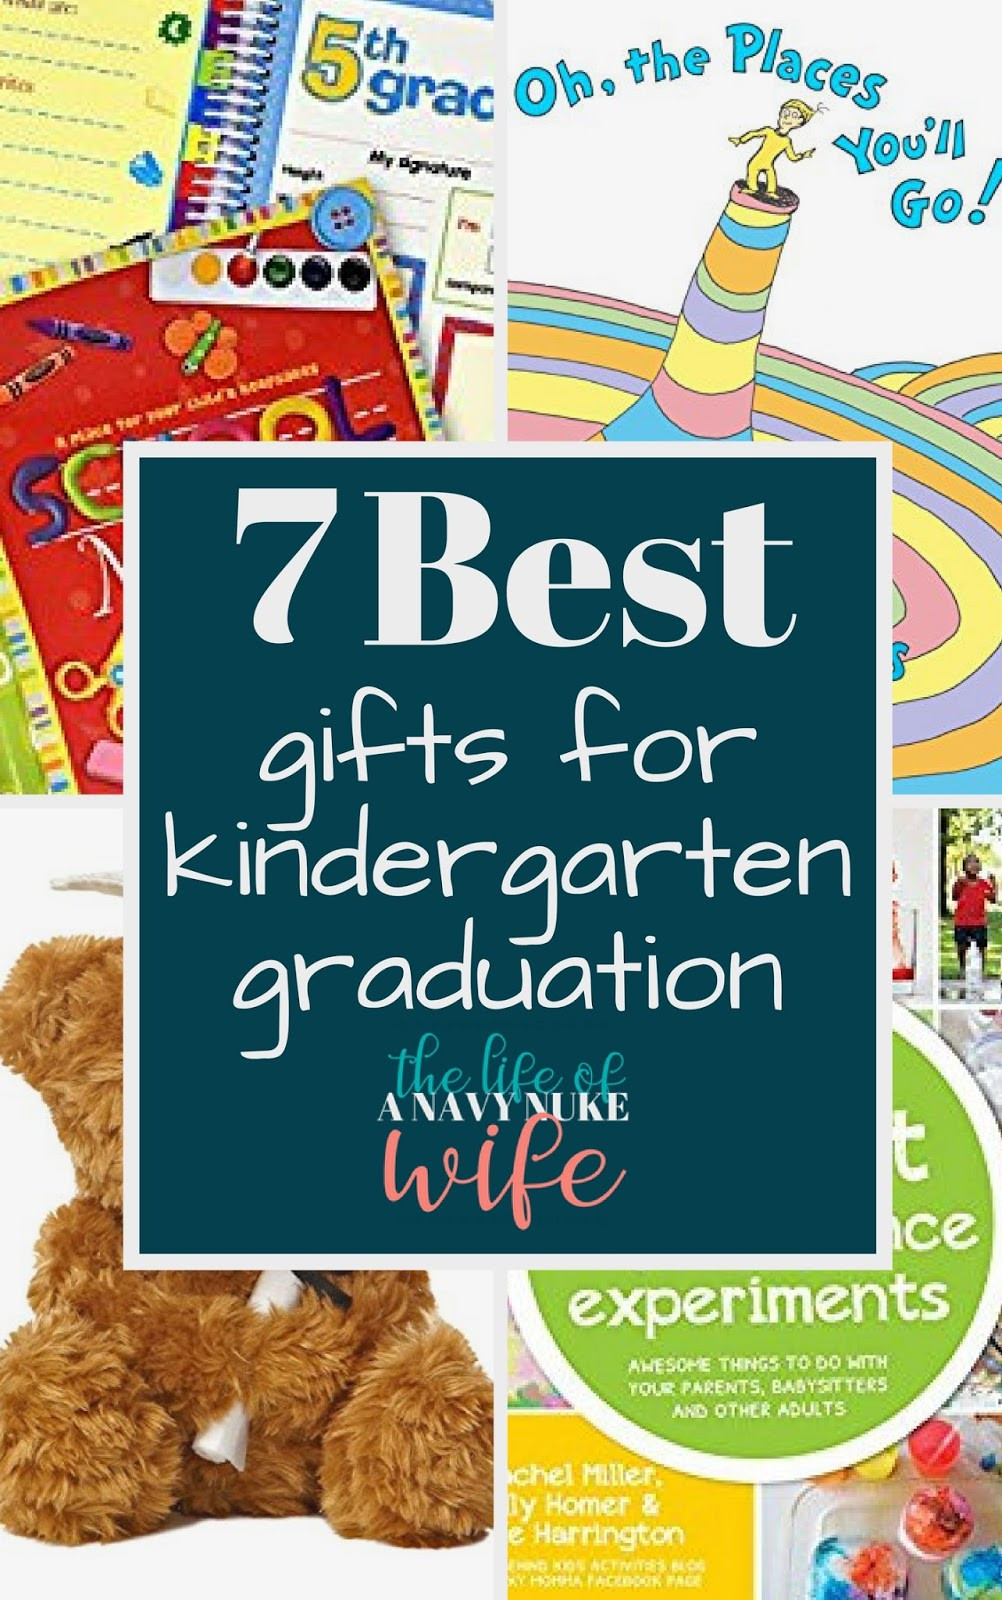 Preschool Graduation Gift Ideas
 Awesome Preschool Graduation Gifts That Will Make You A